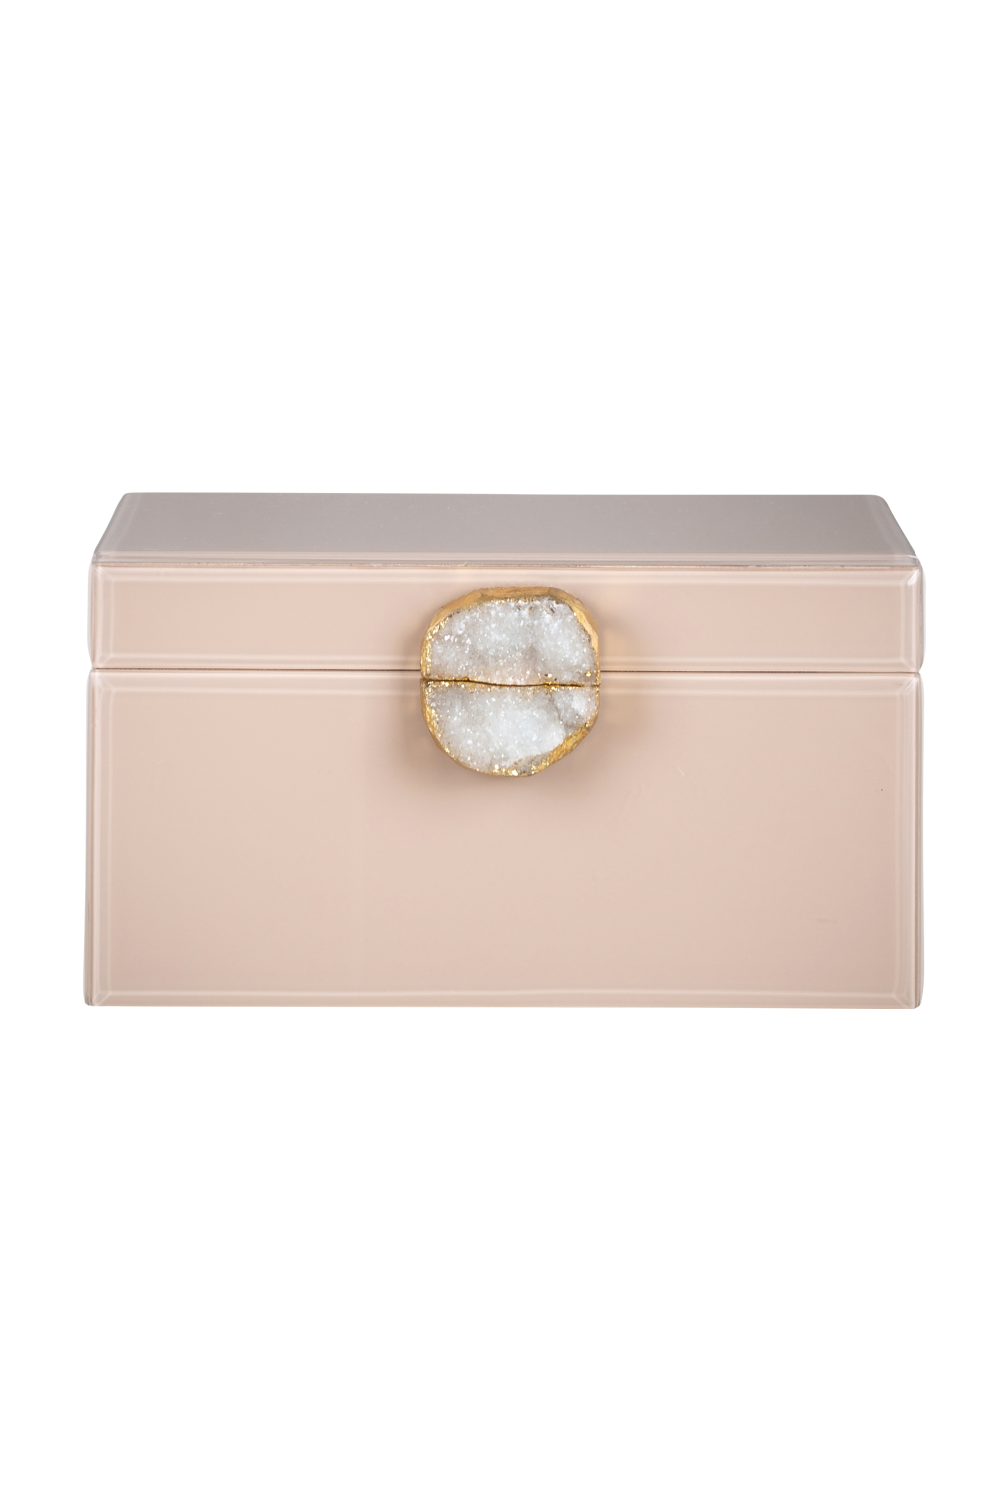 Light Pink Glass Jewellery Box | OROA Jeade | OROA.com